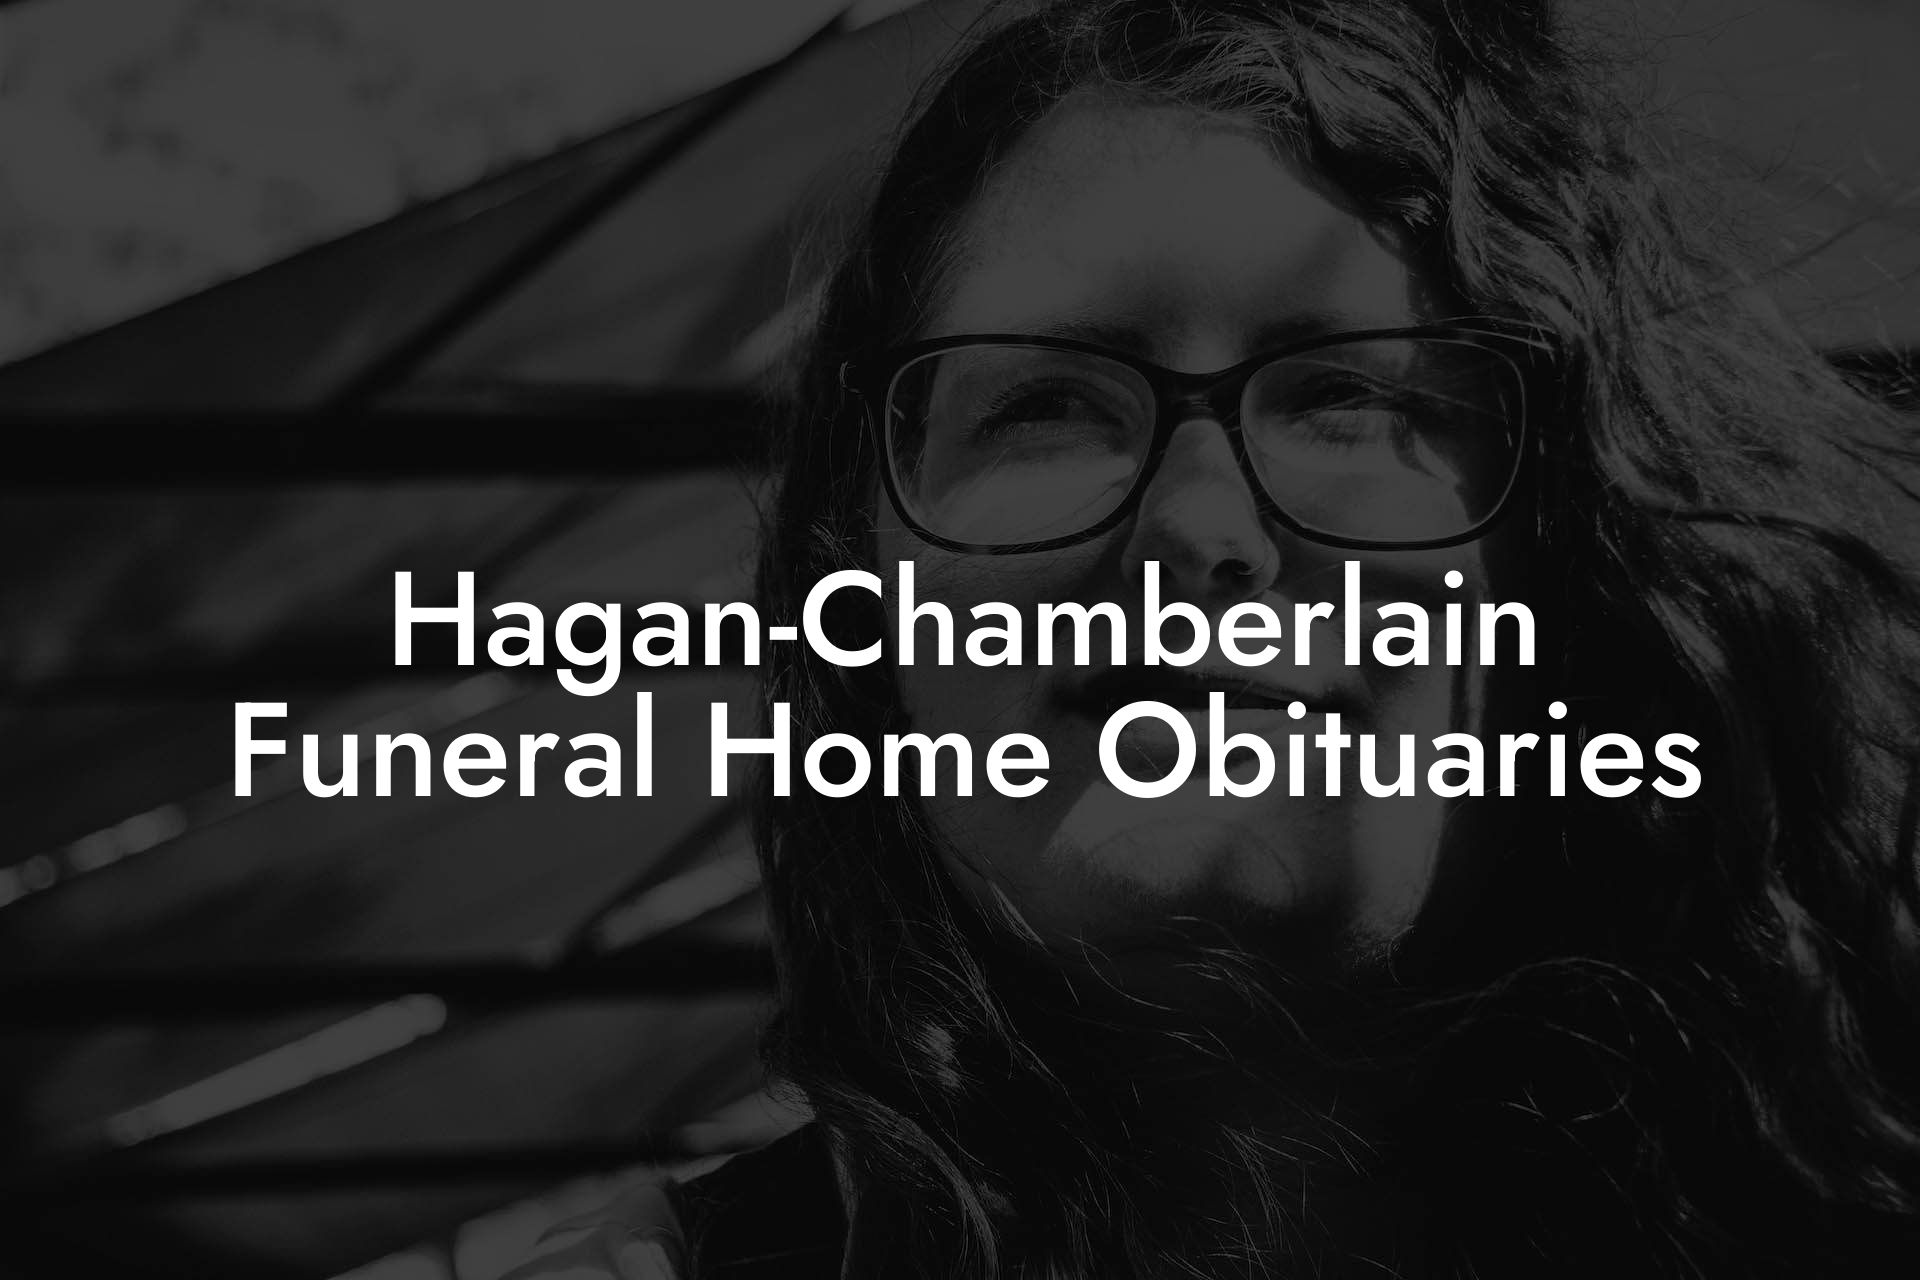 Hagan-Chamberlain Funeral Home Obituaries